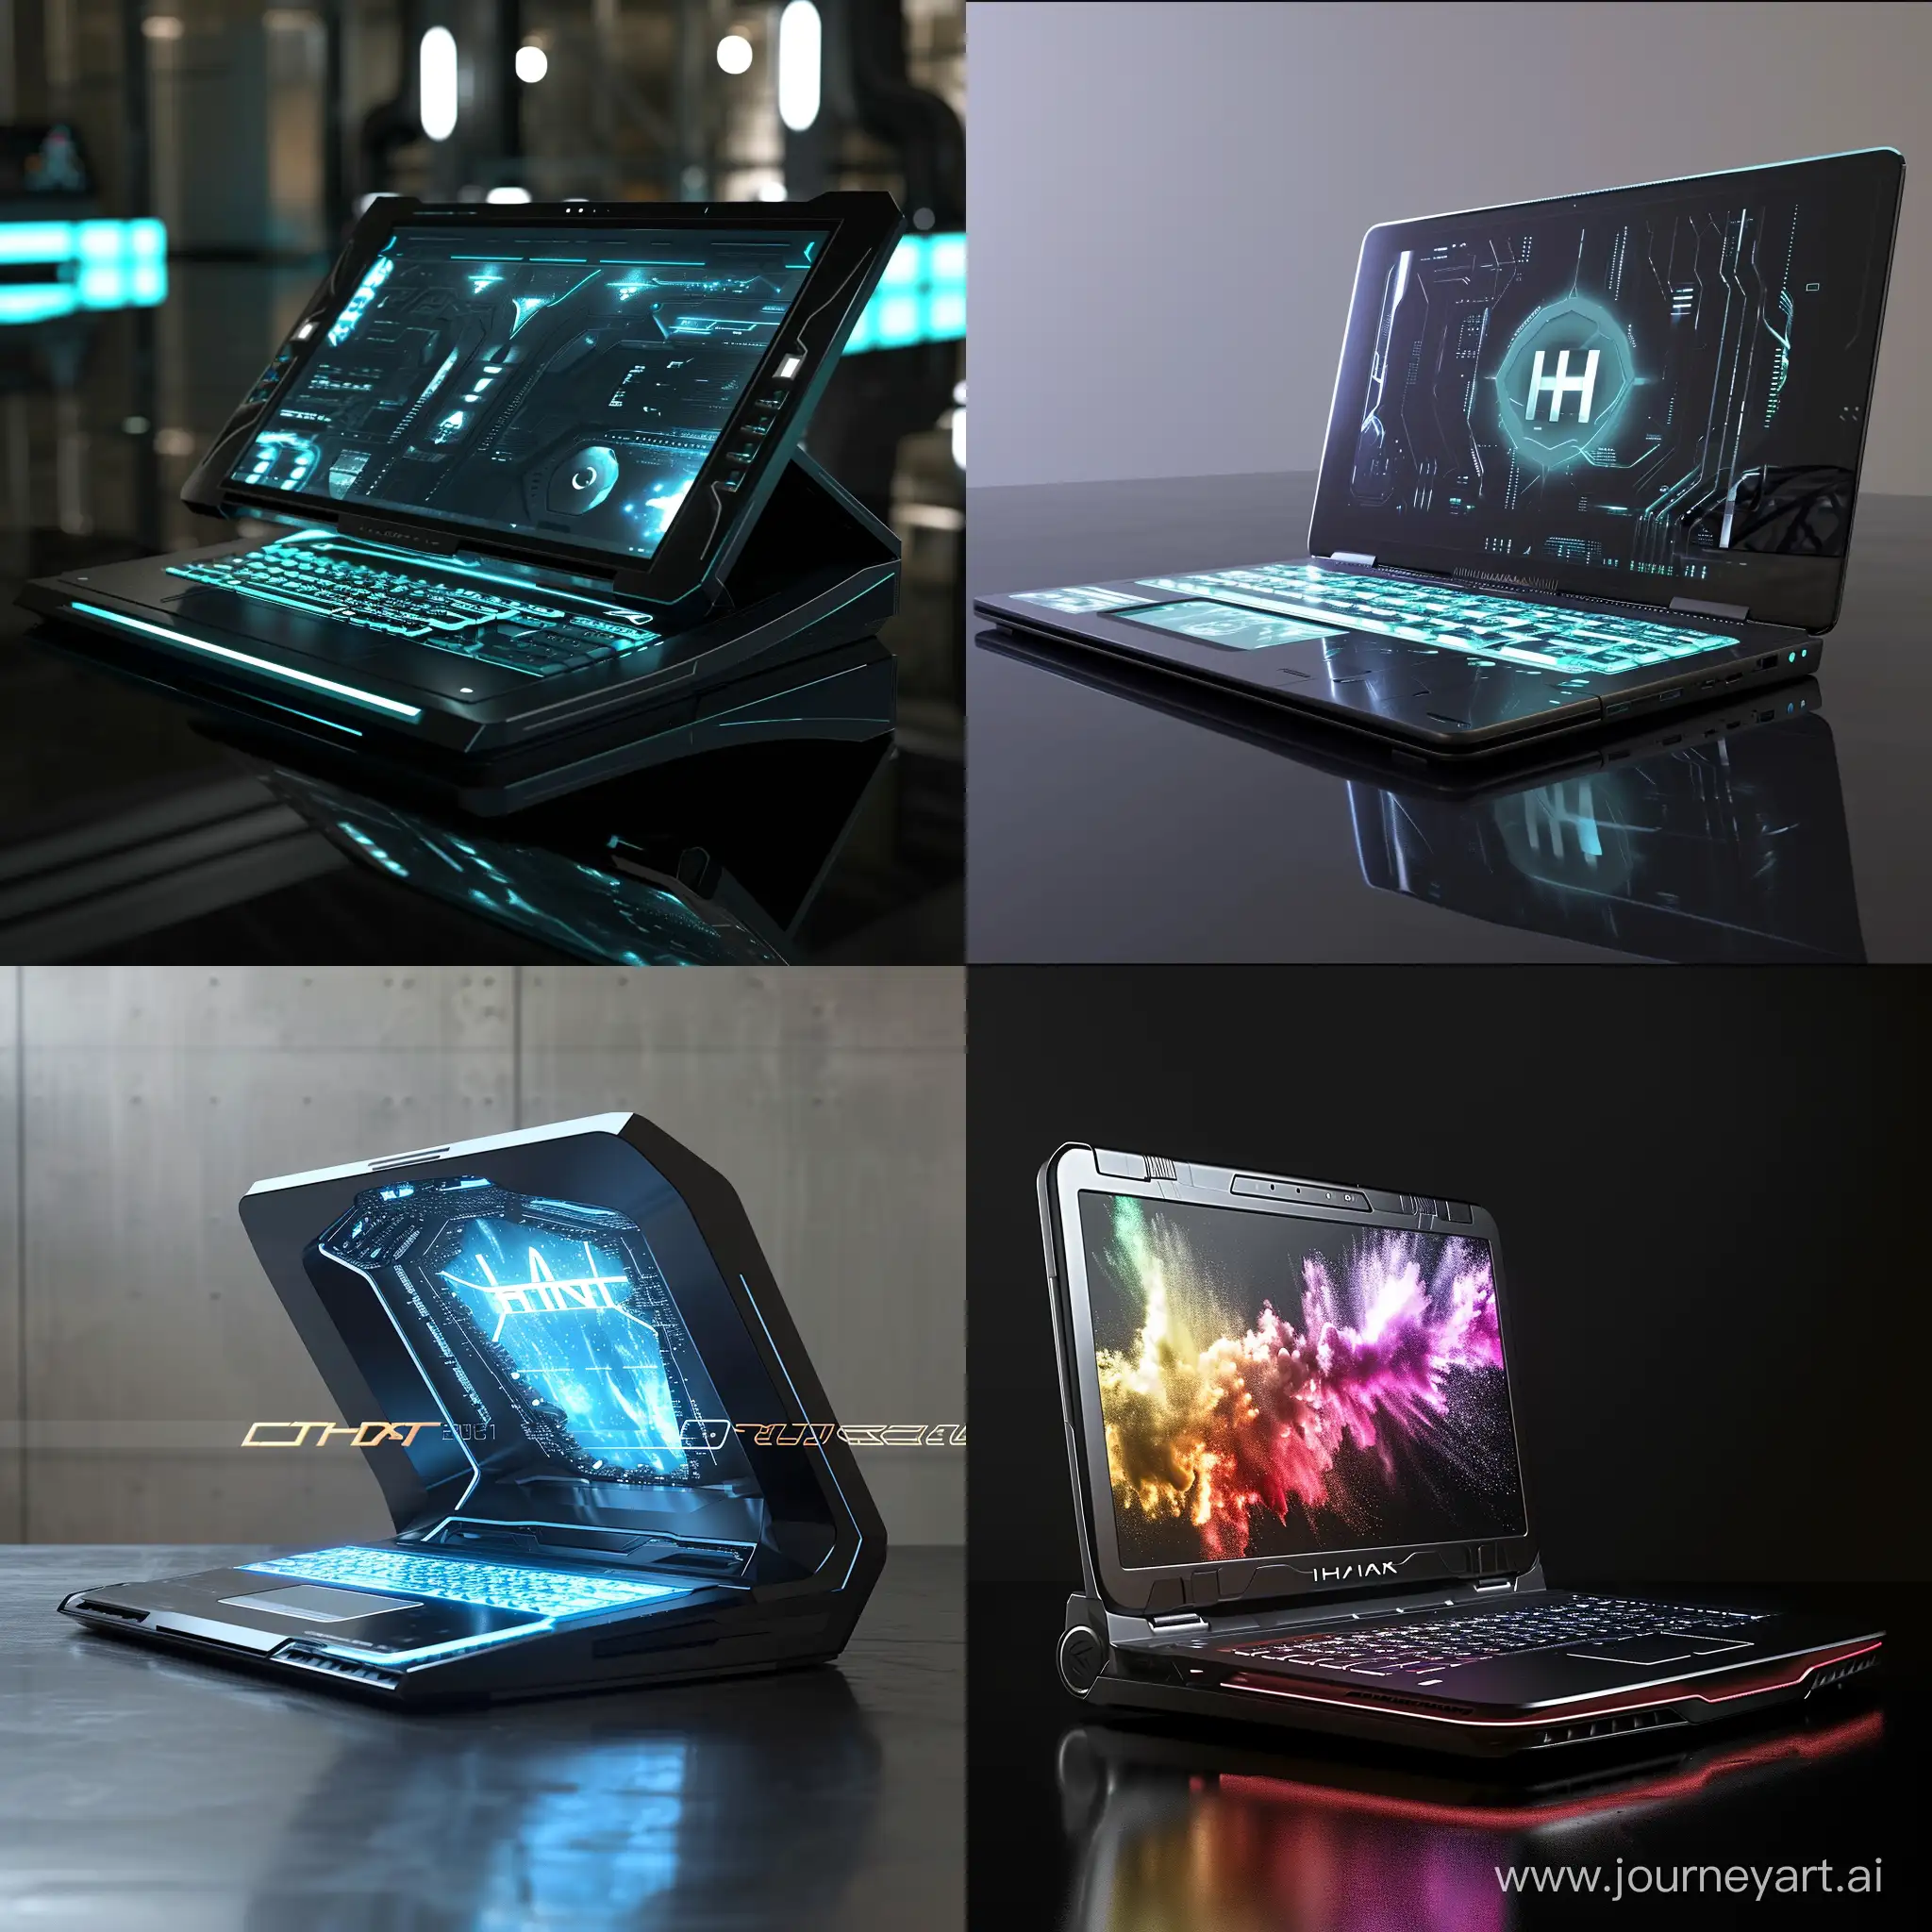 Futuristic-HALO-Laptop-with-AR-11-Display-HighTech-Innovation